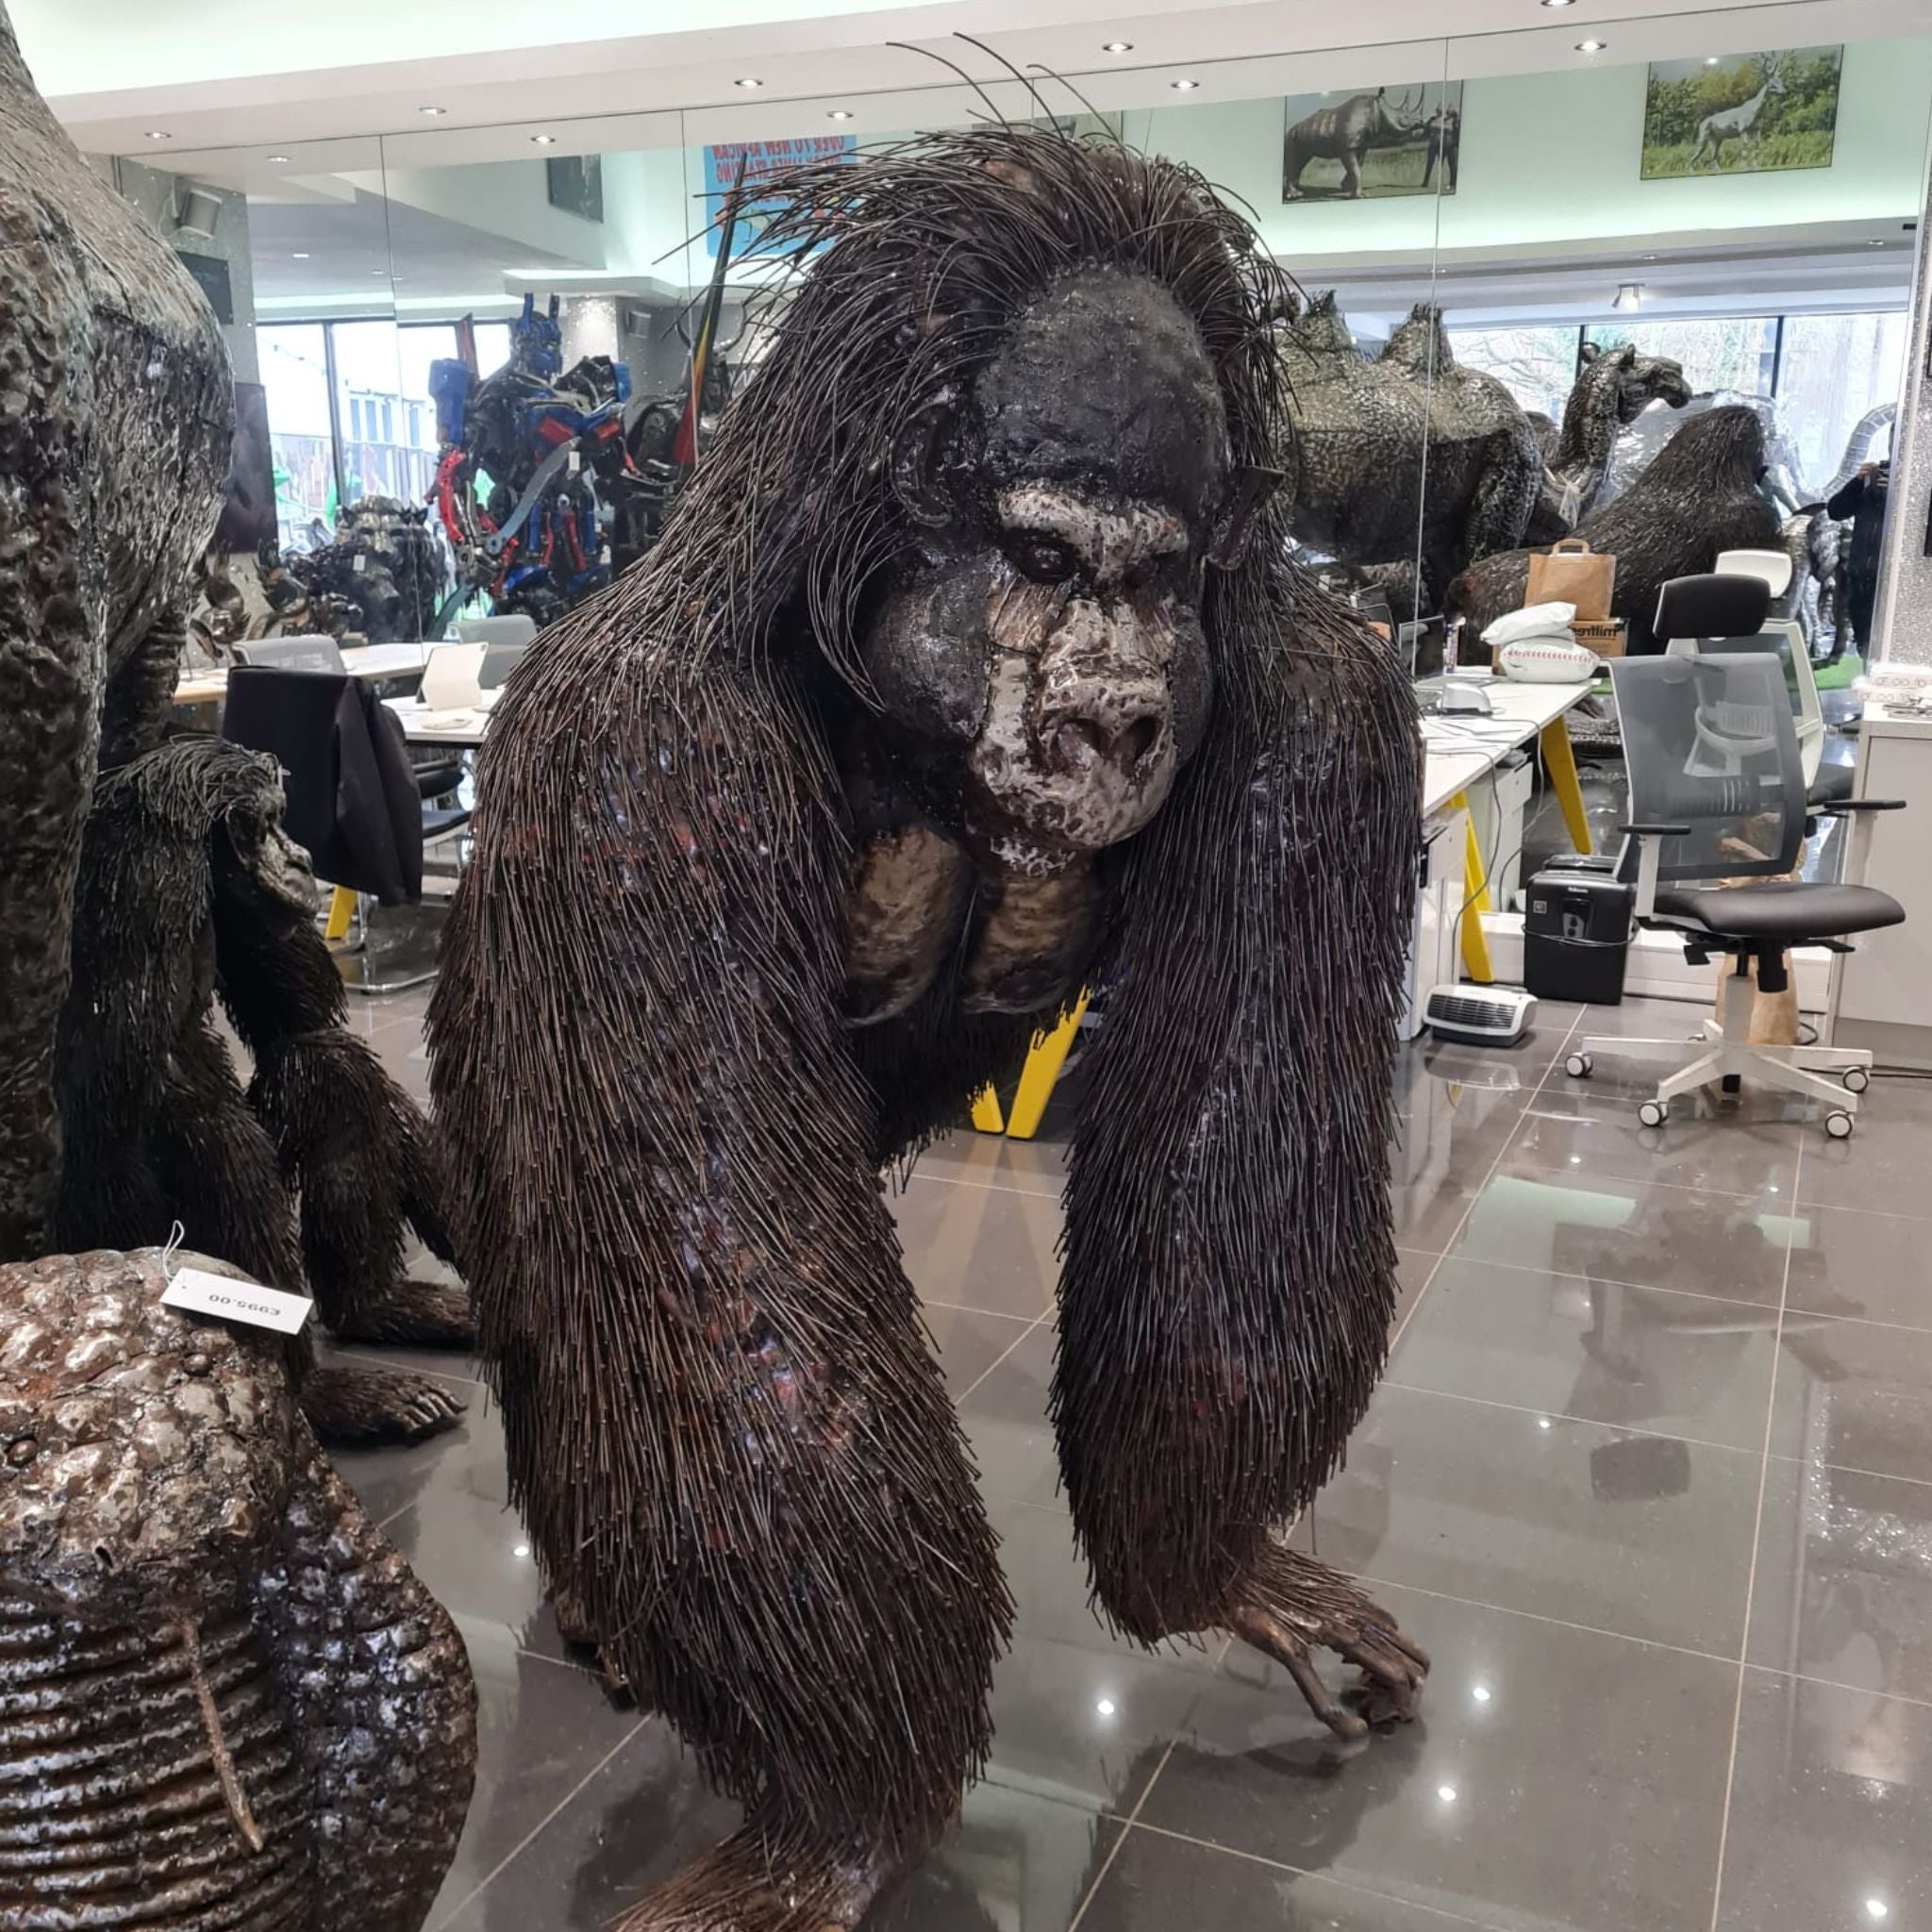 Natural walking Gorilla - Pangea Sculptures